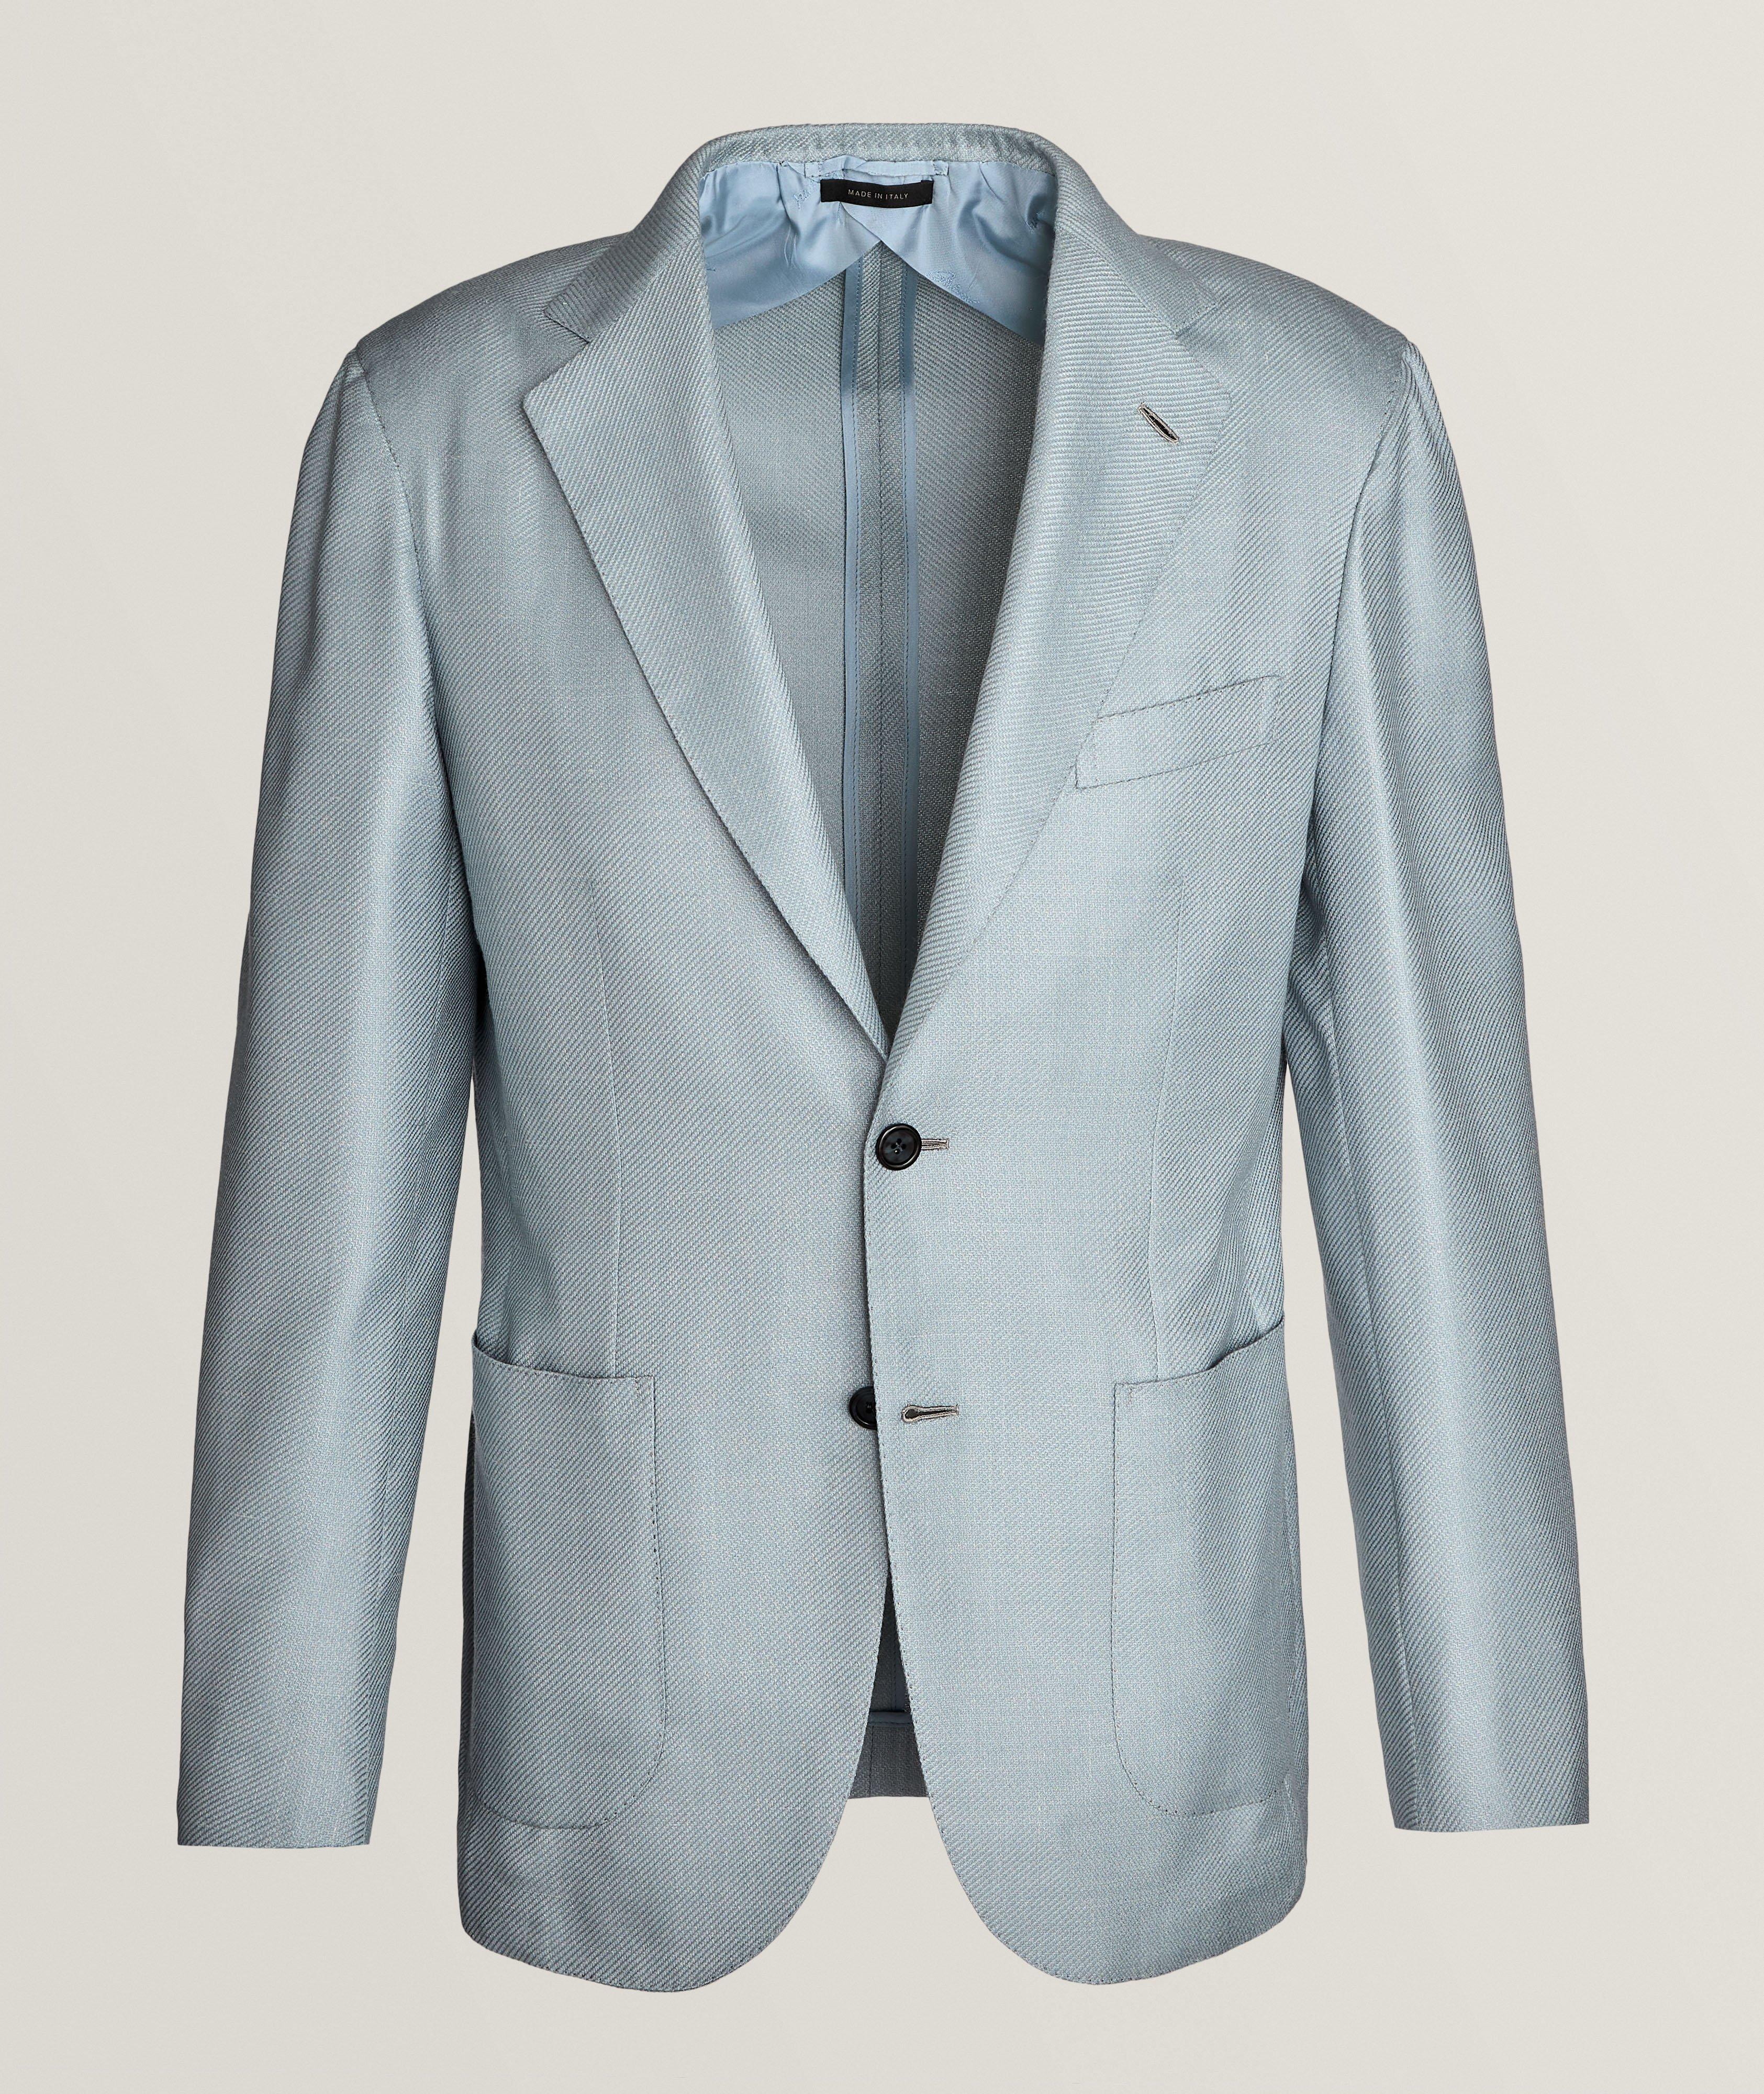 New Plume Textured Cashmere, Silk & Linen Sport Jacket image 0